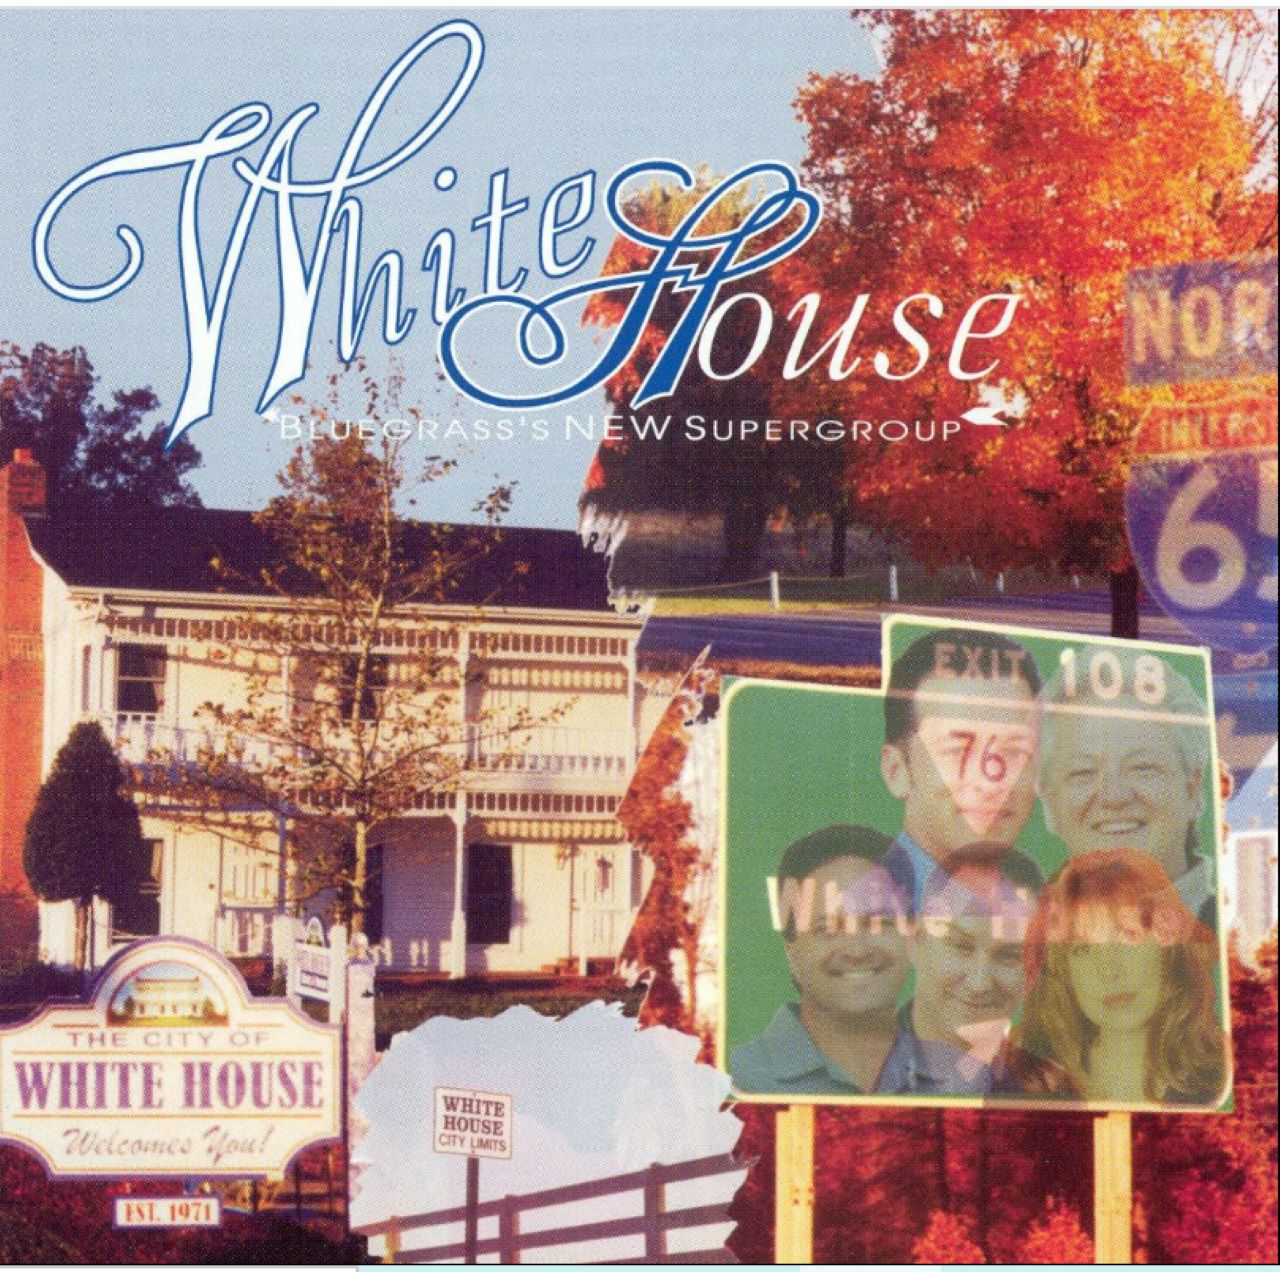 White House – White House cover album